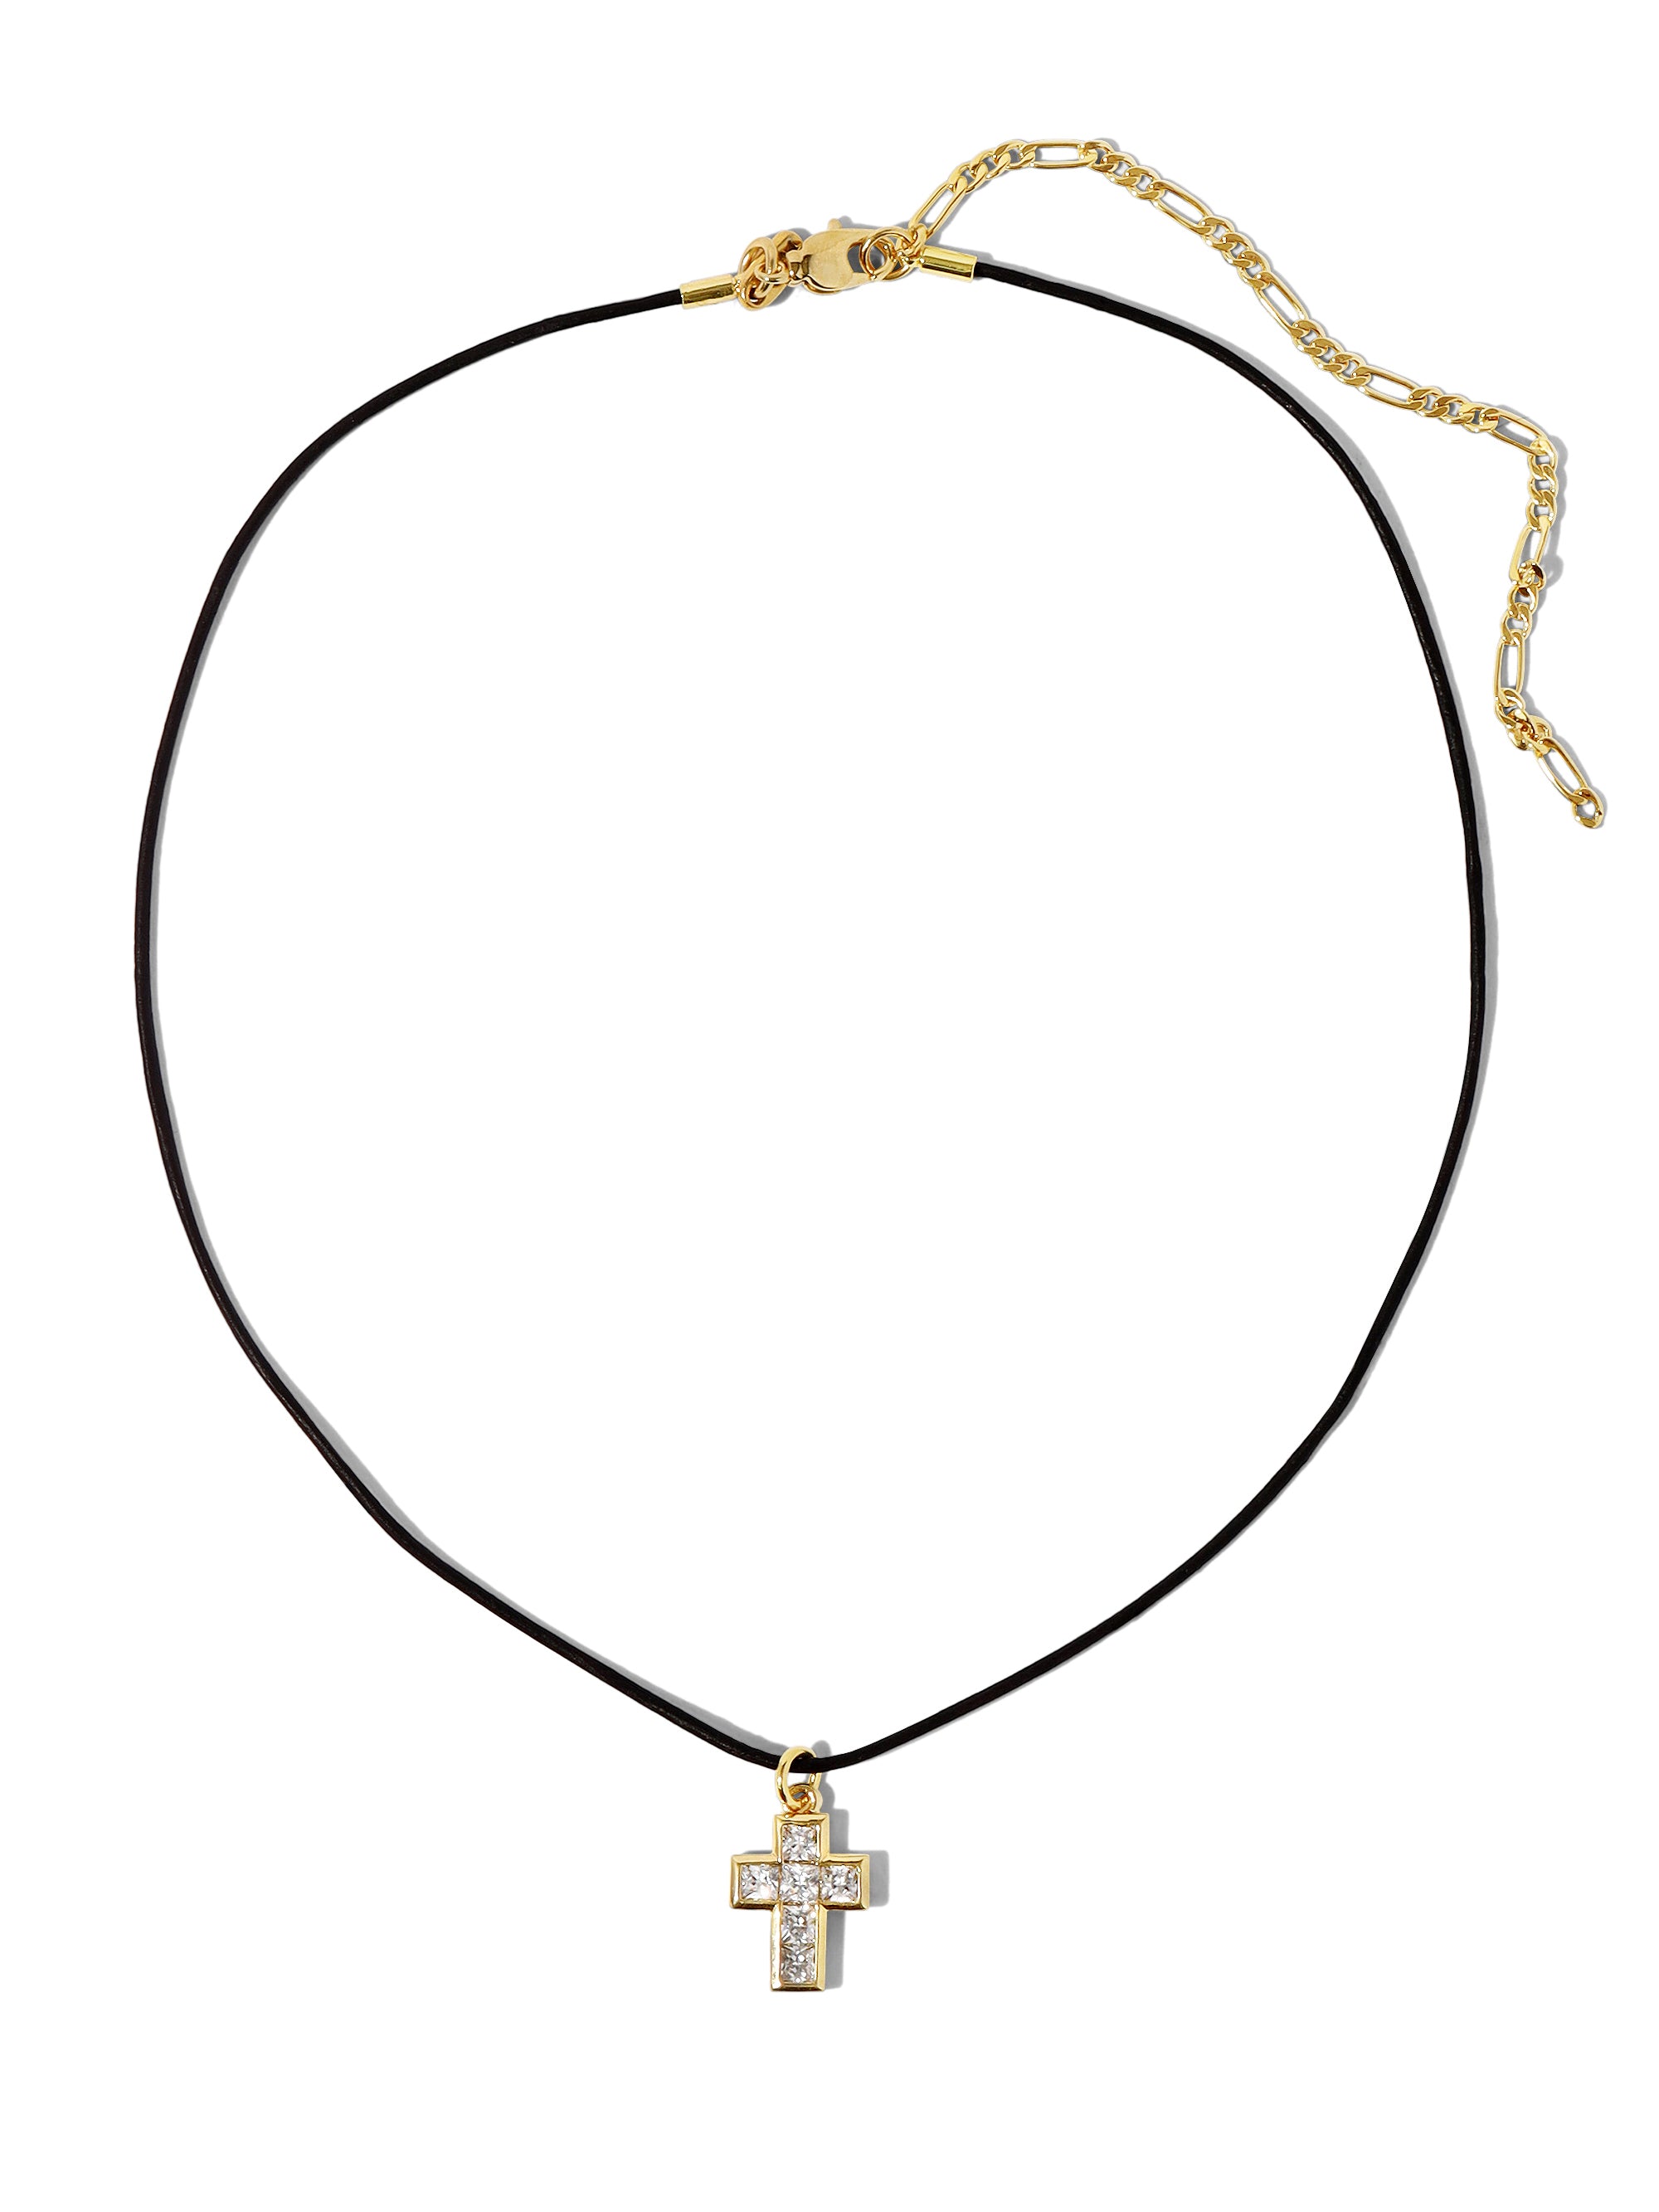 Simple Cross Necklace 18K Gold\\/Silver Filled Faith Pendant Cross Choker  Tiny Necklace for Women Girls - Walmart.com